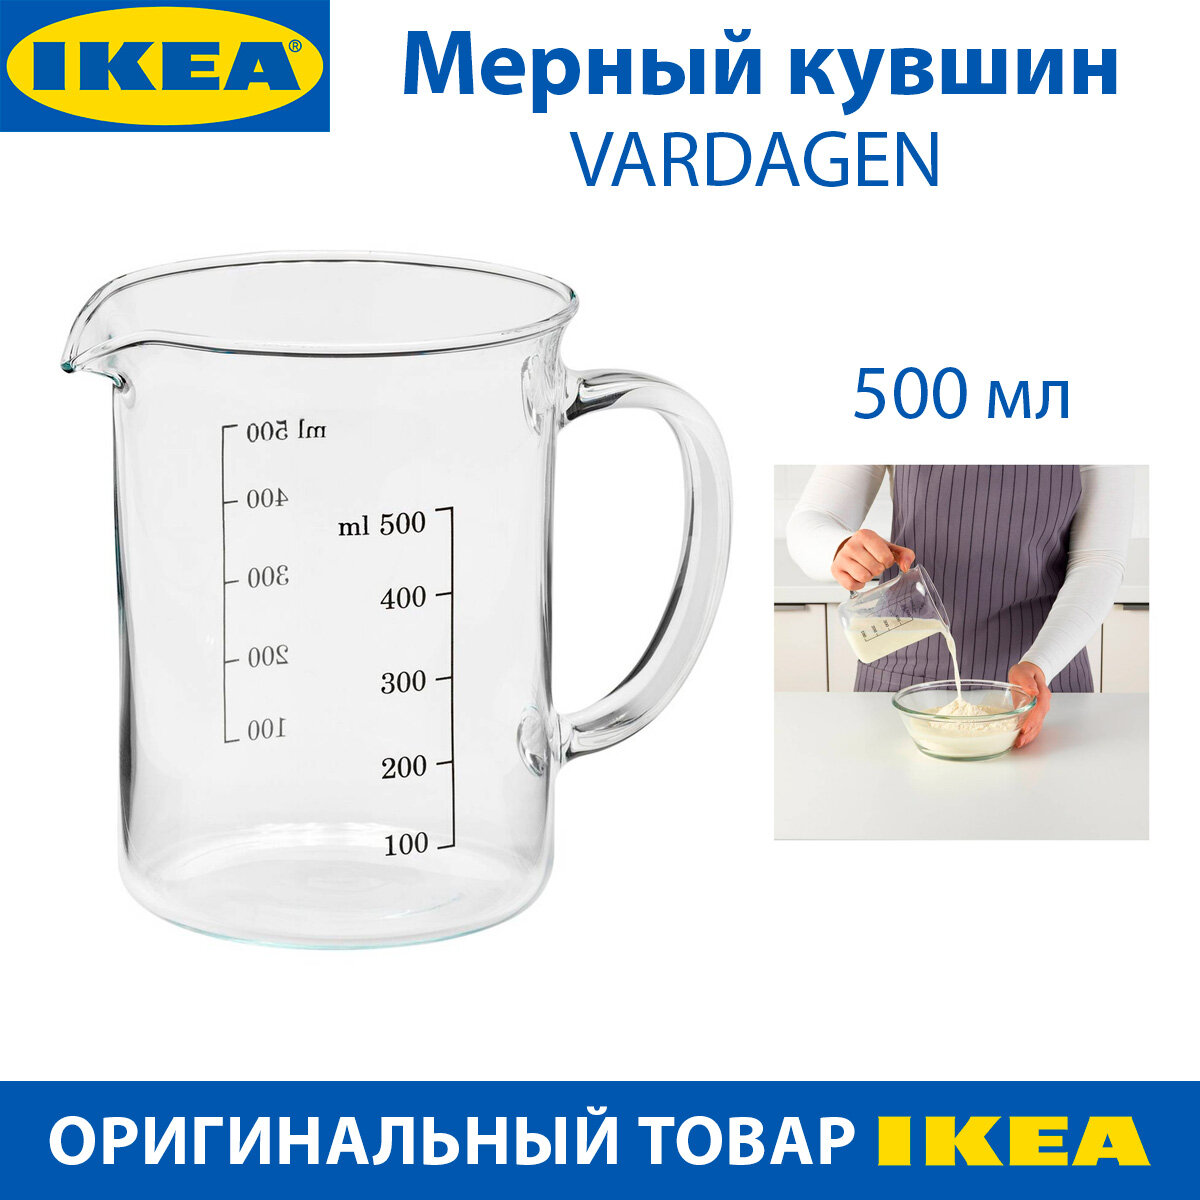 Мерный кувшин IKEA VARDAGEN (вардаген), из жаростойкого стекла, объем 0.5 л, 1 шт